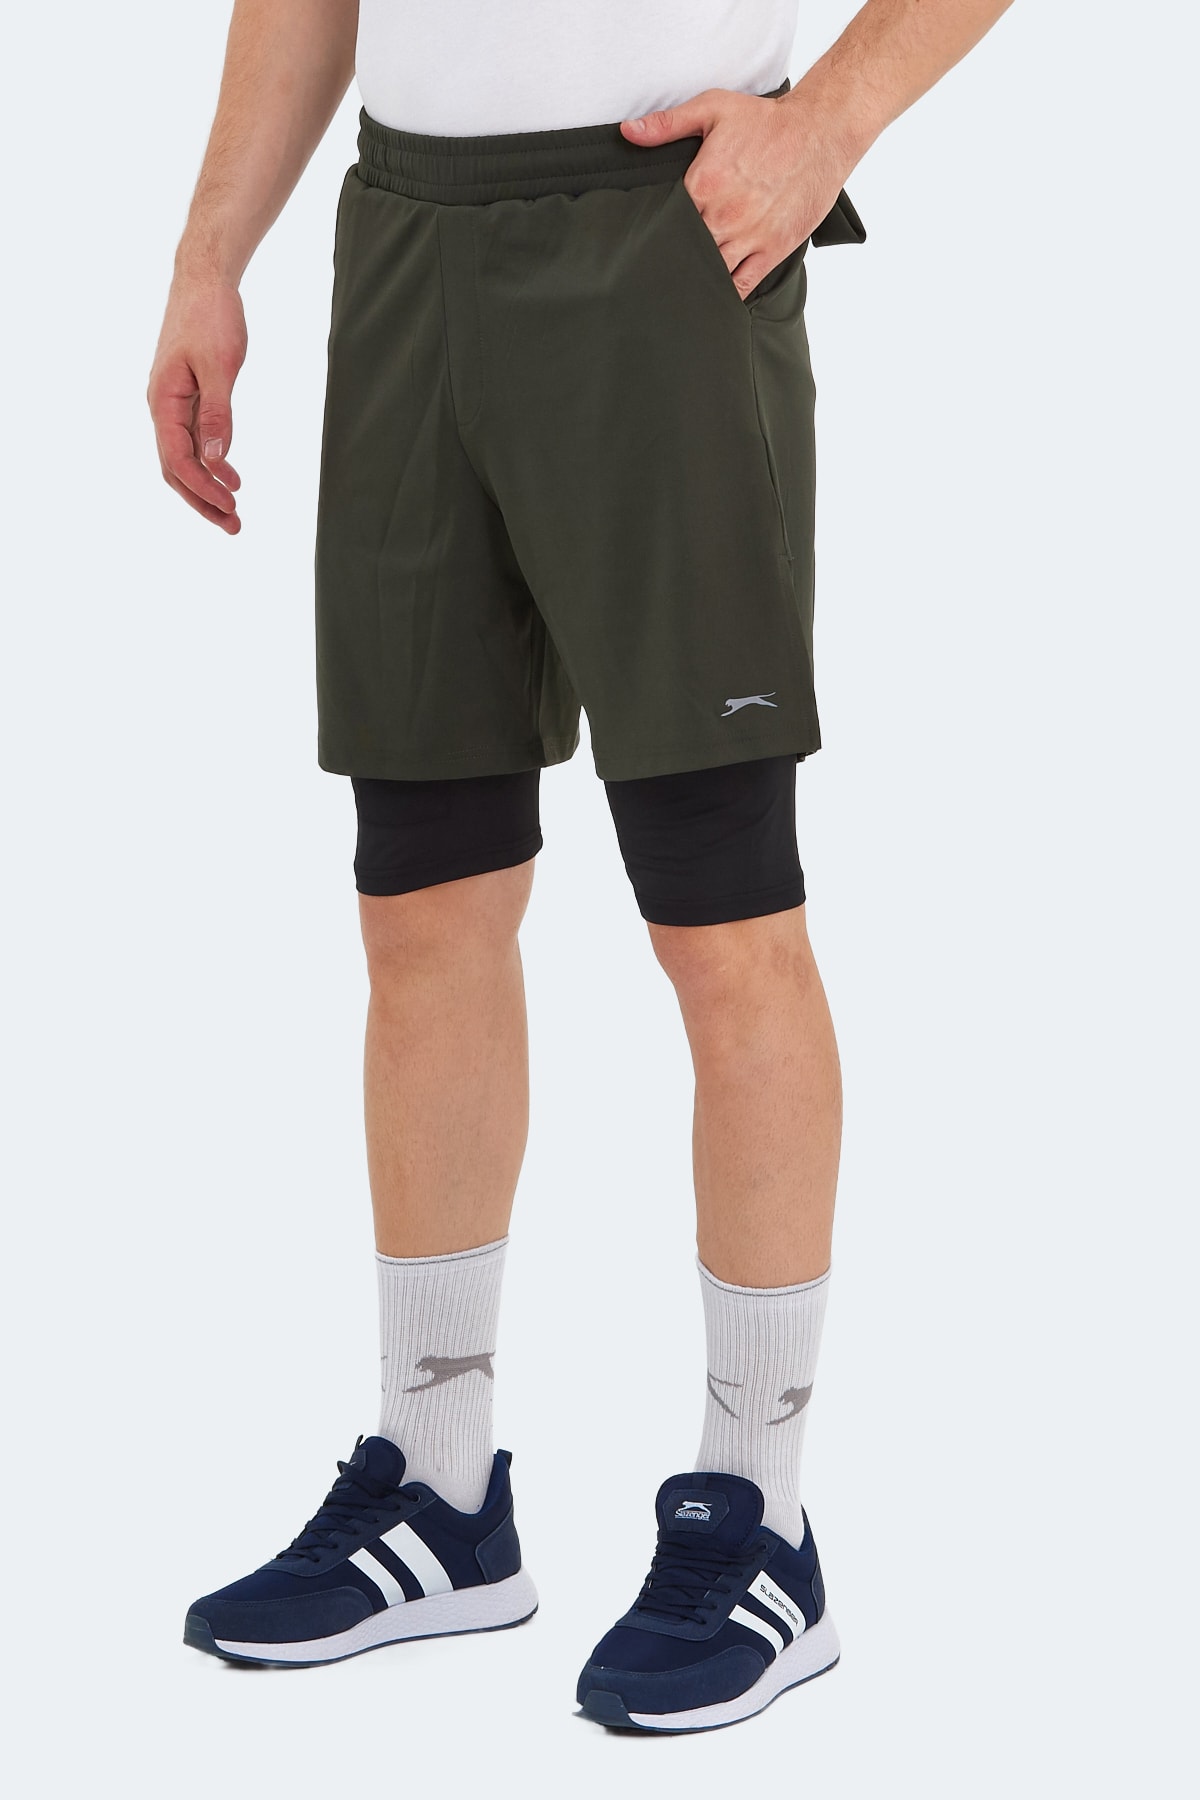 Slazenger SABLE Men's Shorts Khaki